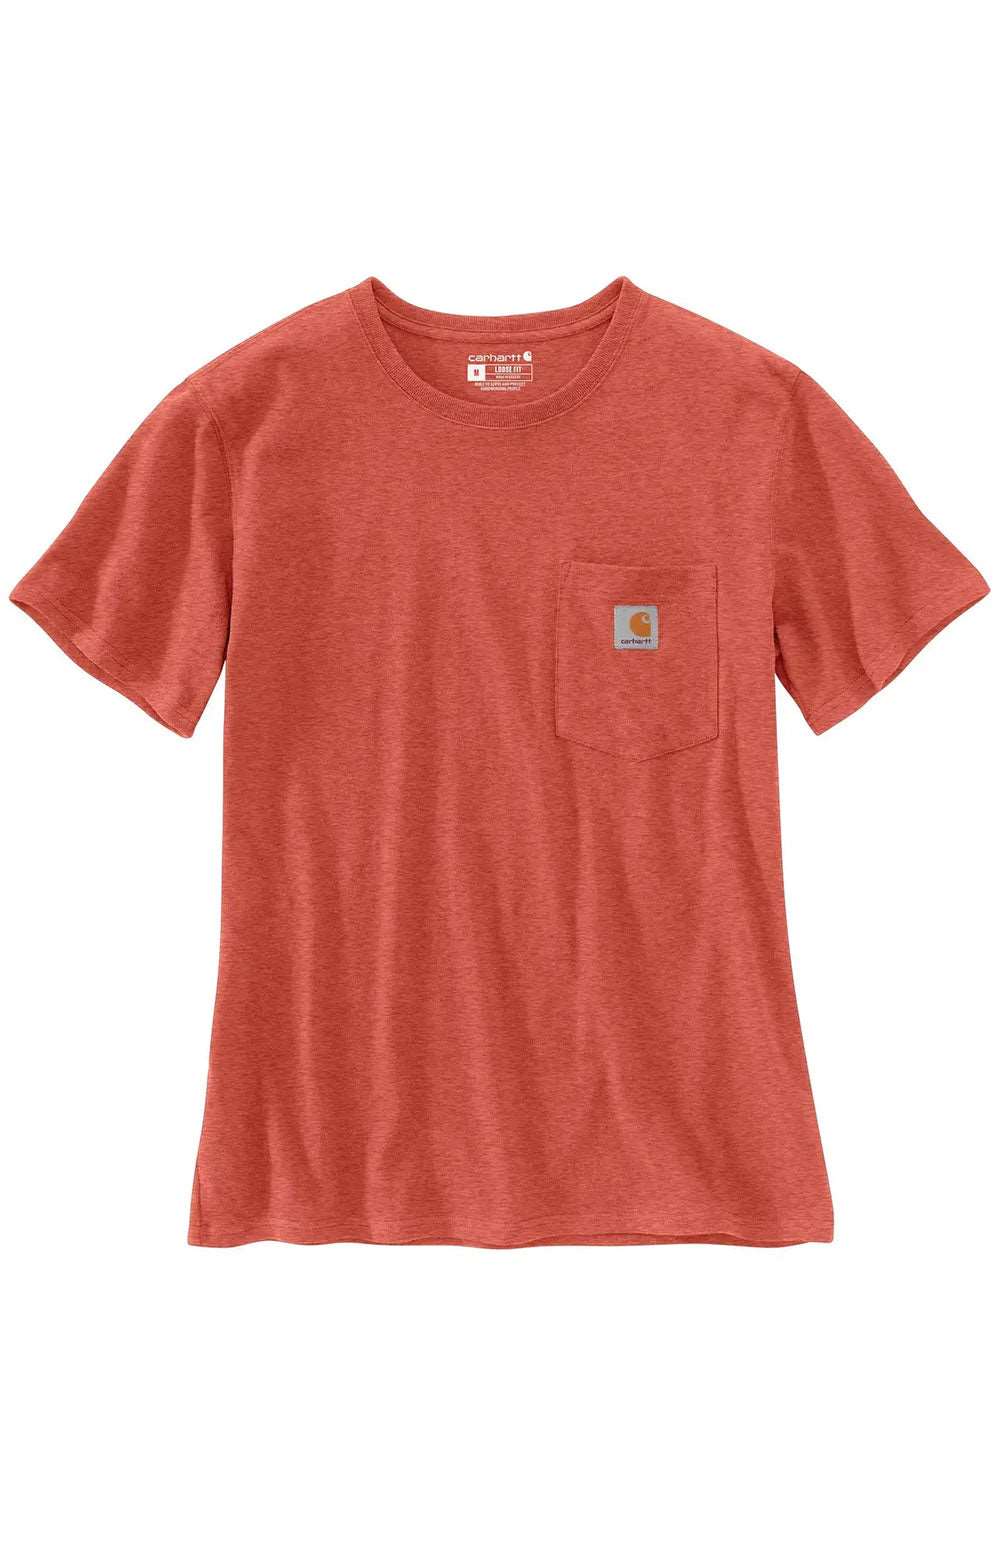 (103067) WK87 Workwear Pocket T-Shirt - Earthen Clay Heather